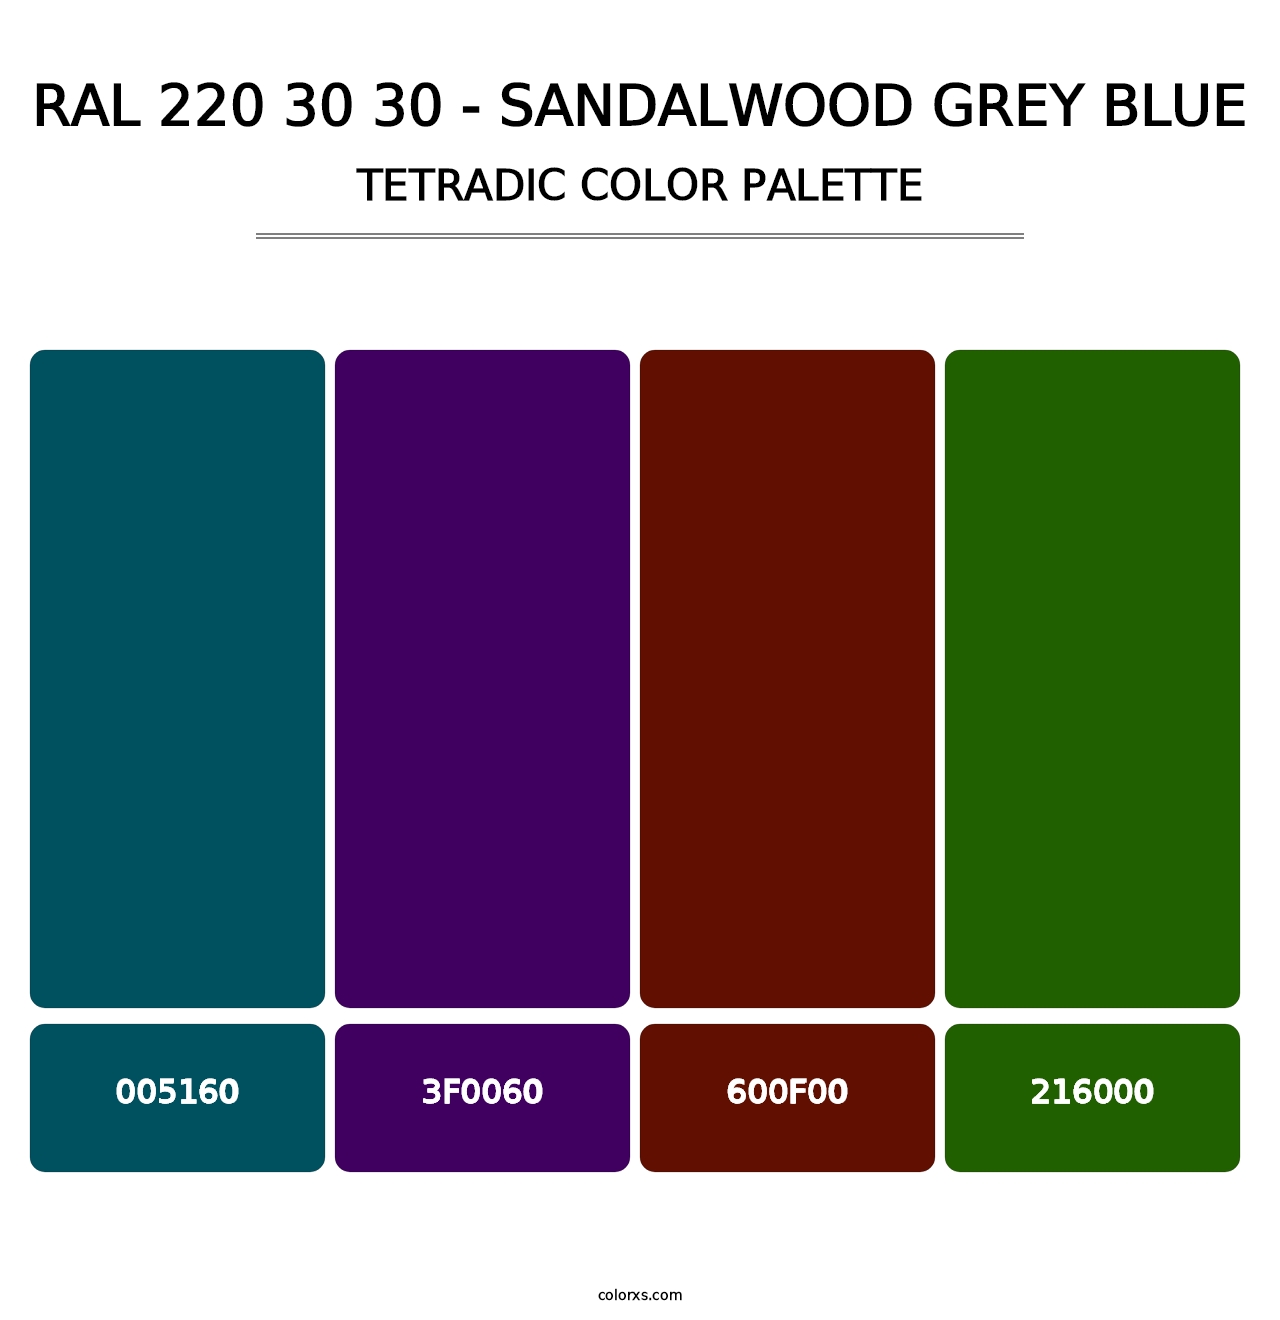 RAL 220 30 30 - Sandalwood Grey Blue - Tetradic Color Palette